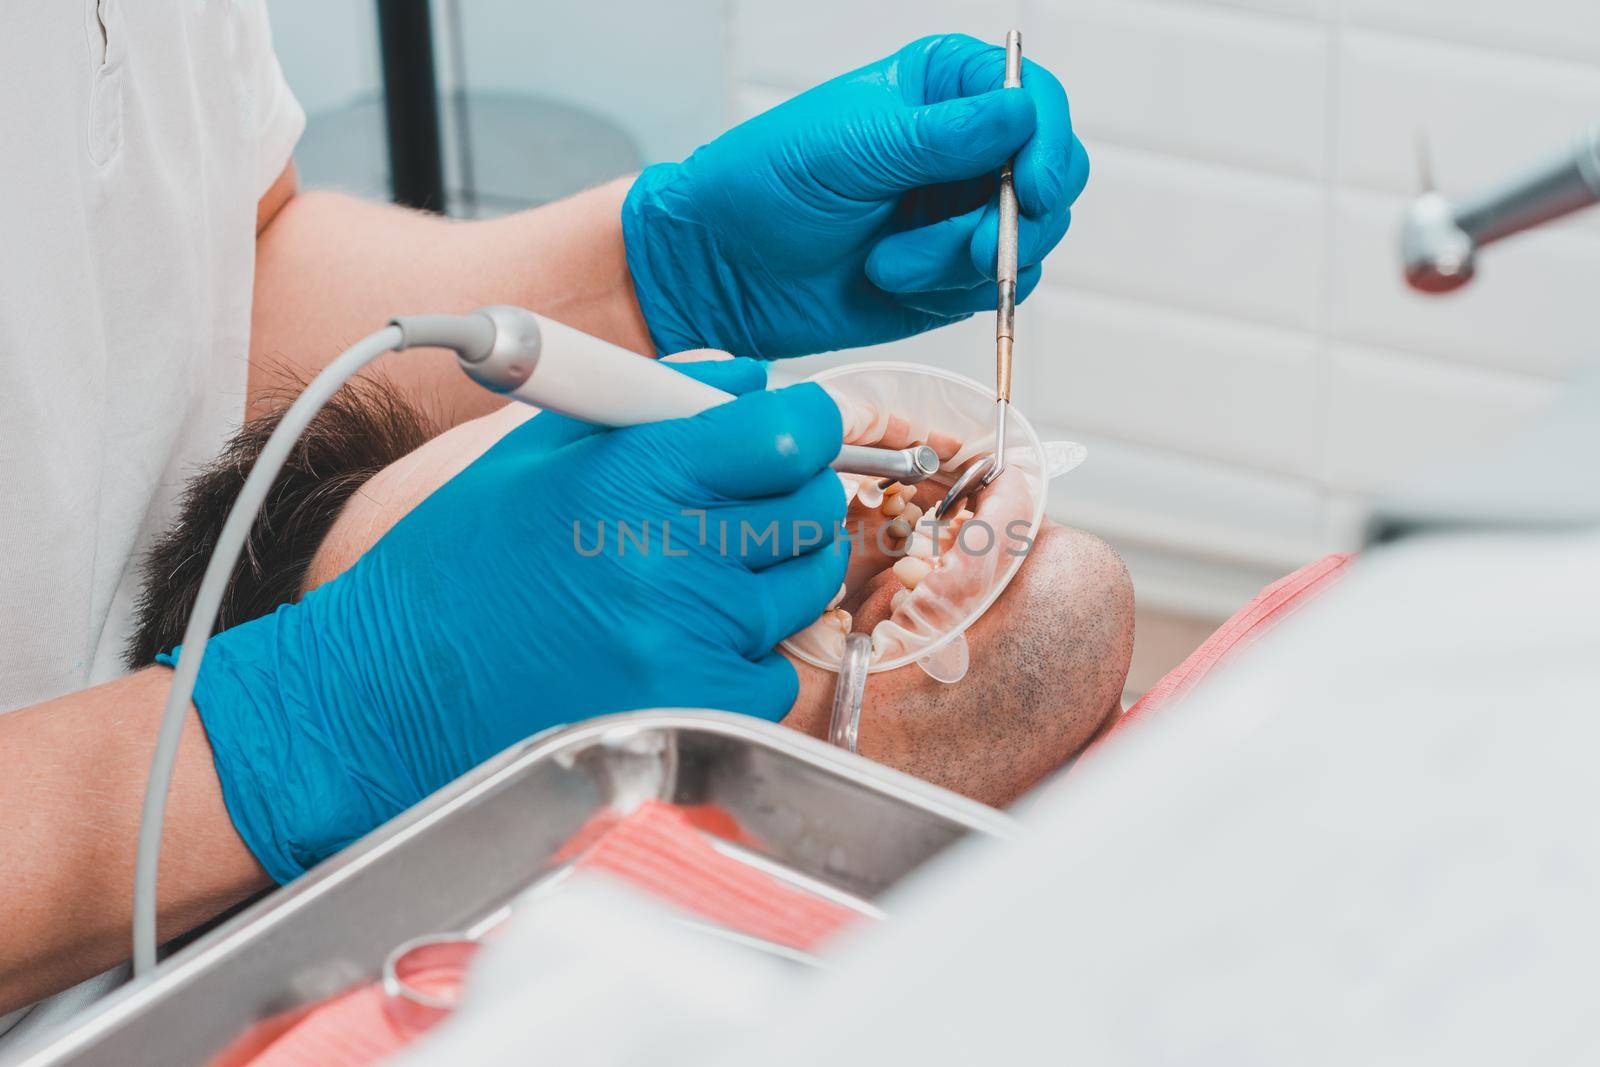 patient removing tartar,the dentist uses ultrasound to remove tartar,dental scaler.2020